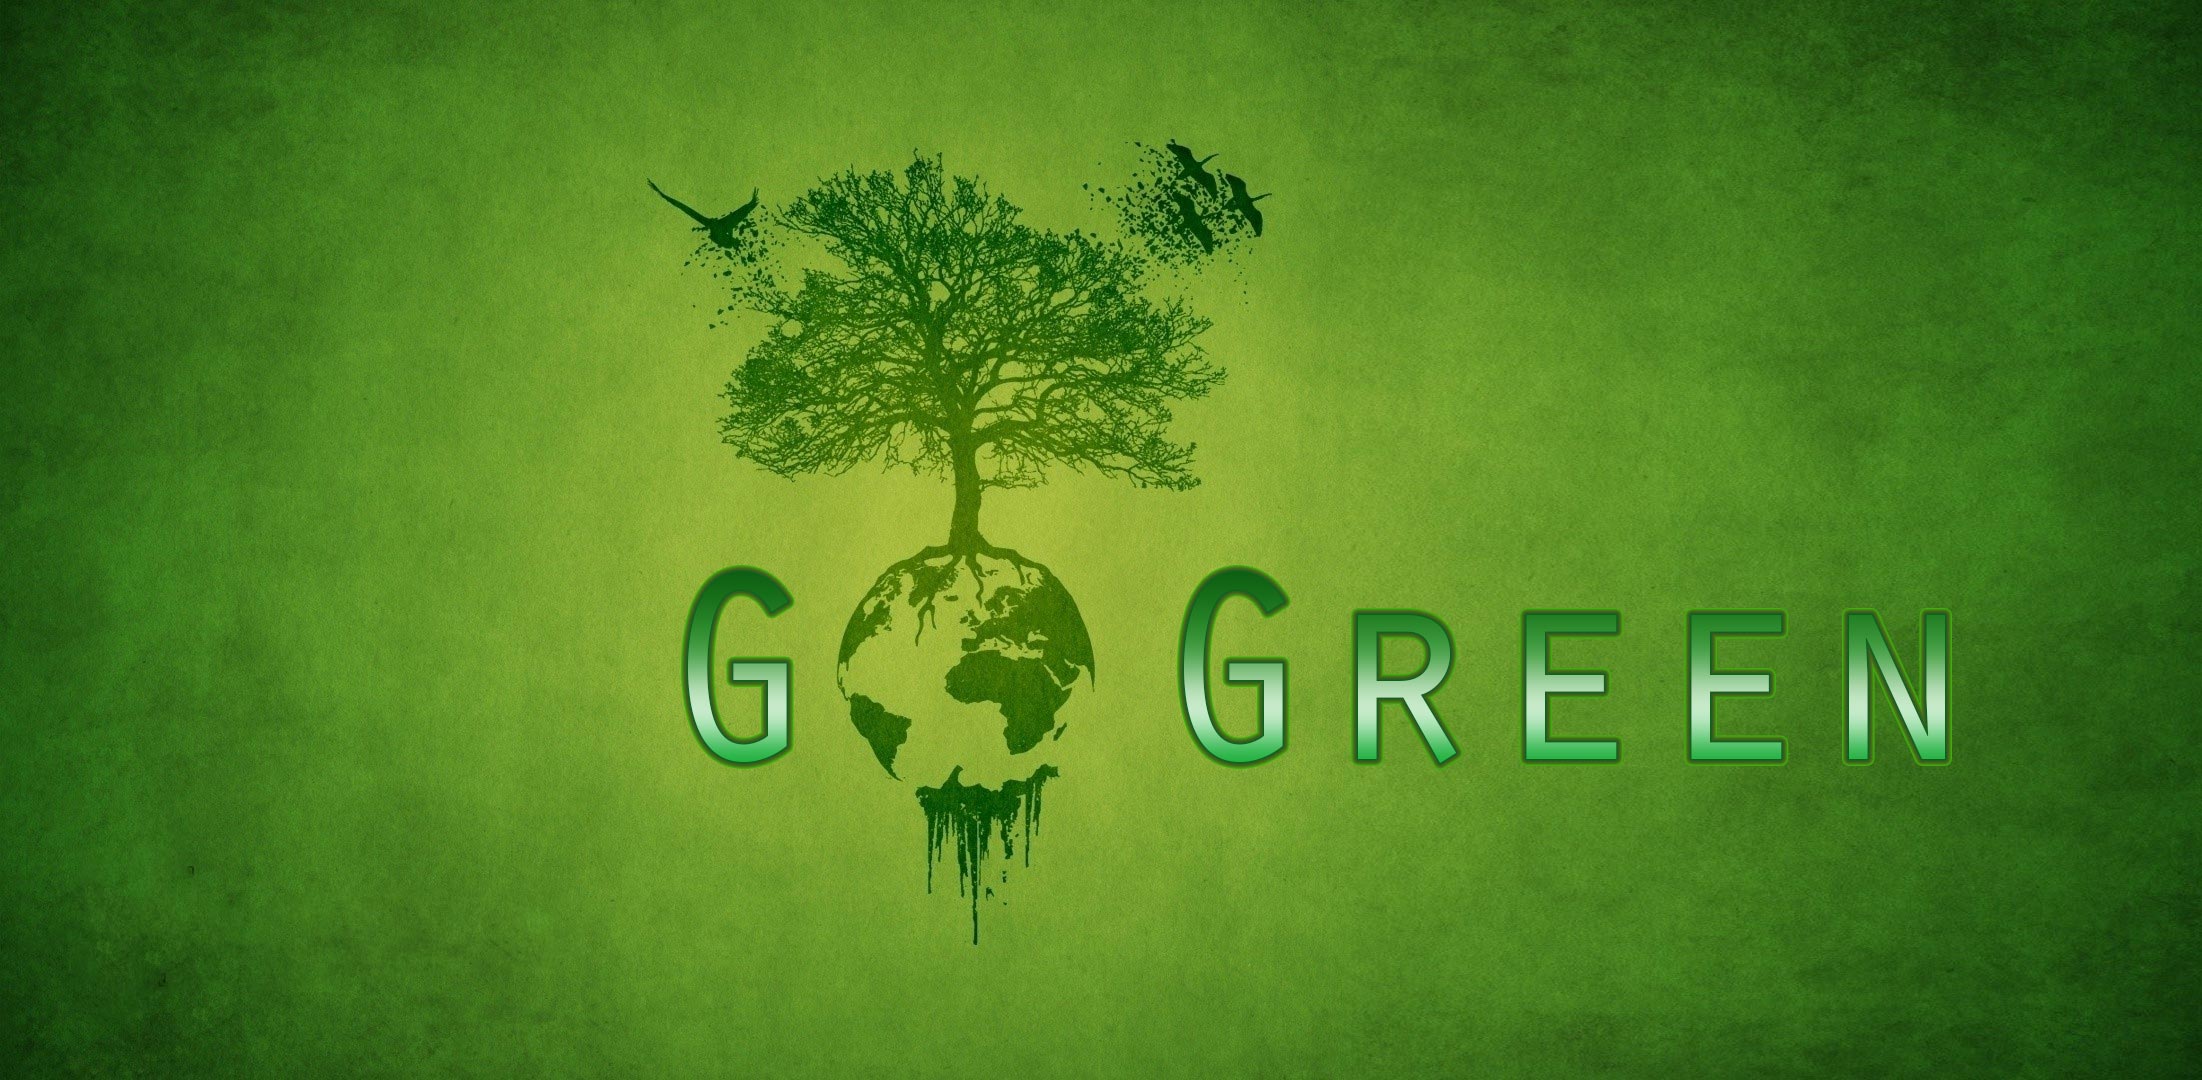 go-green-wallpaper-9.jpg